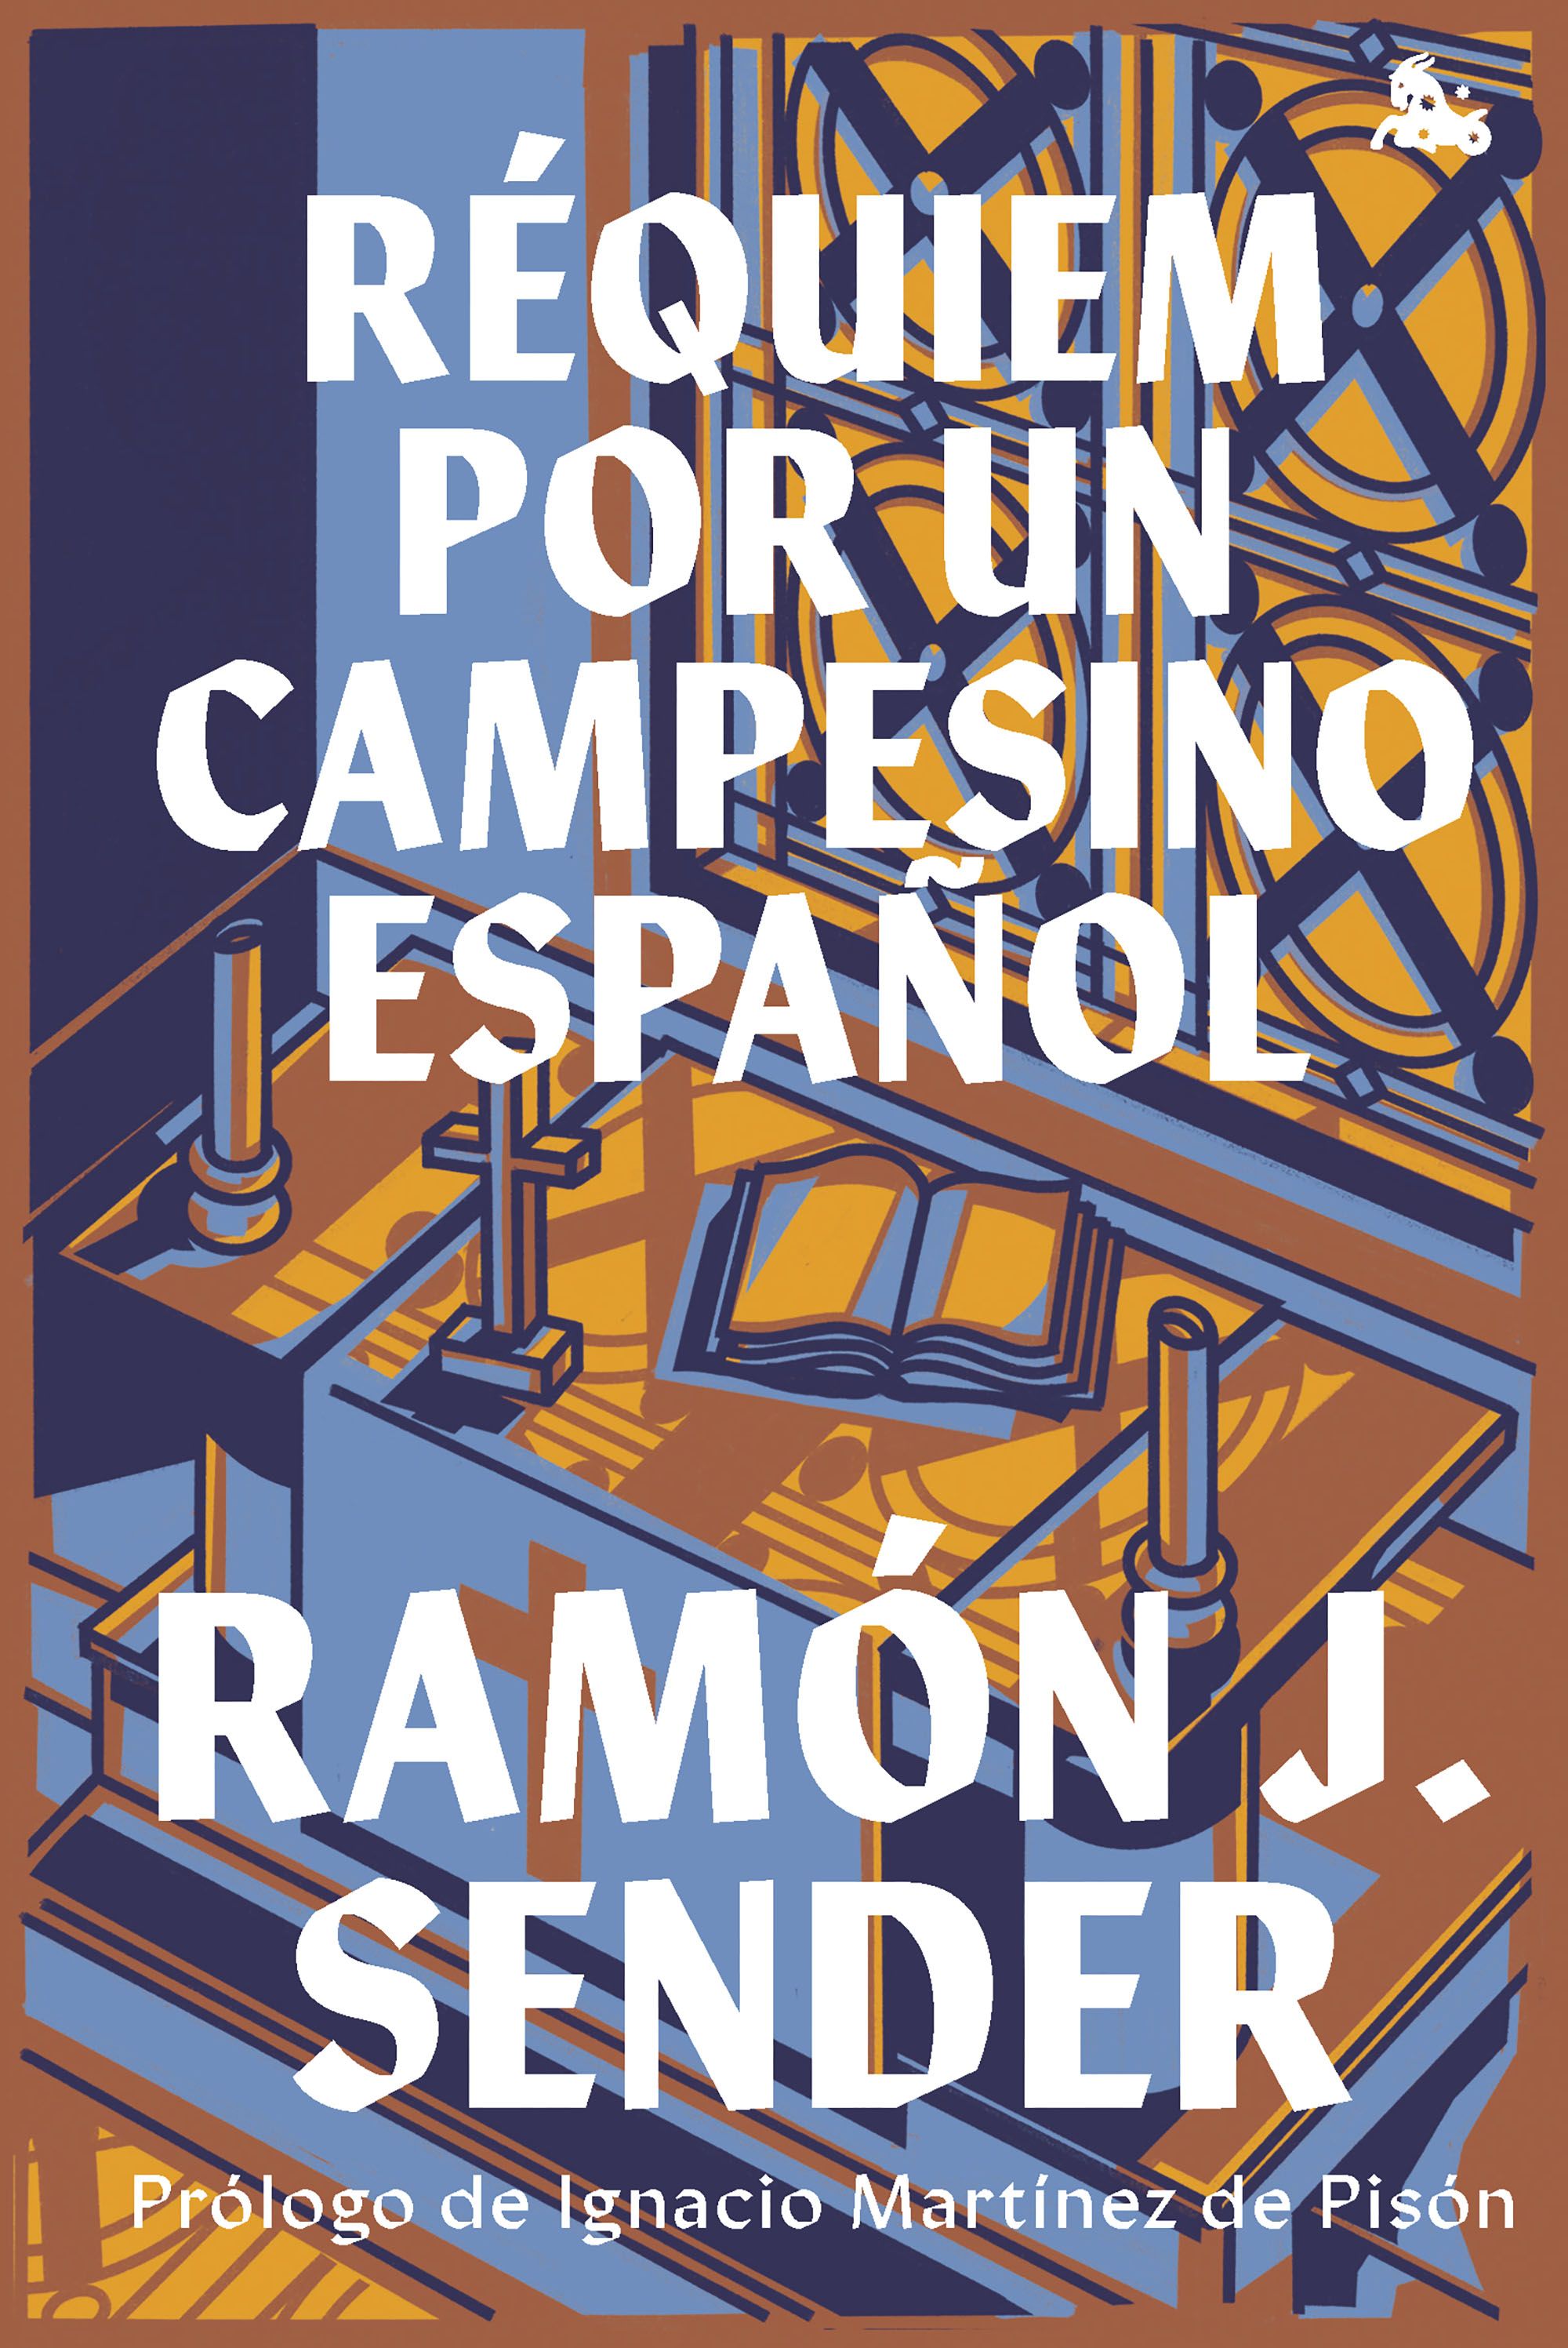 33 Réquiem por un campesino español de Ramón J. Sender